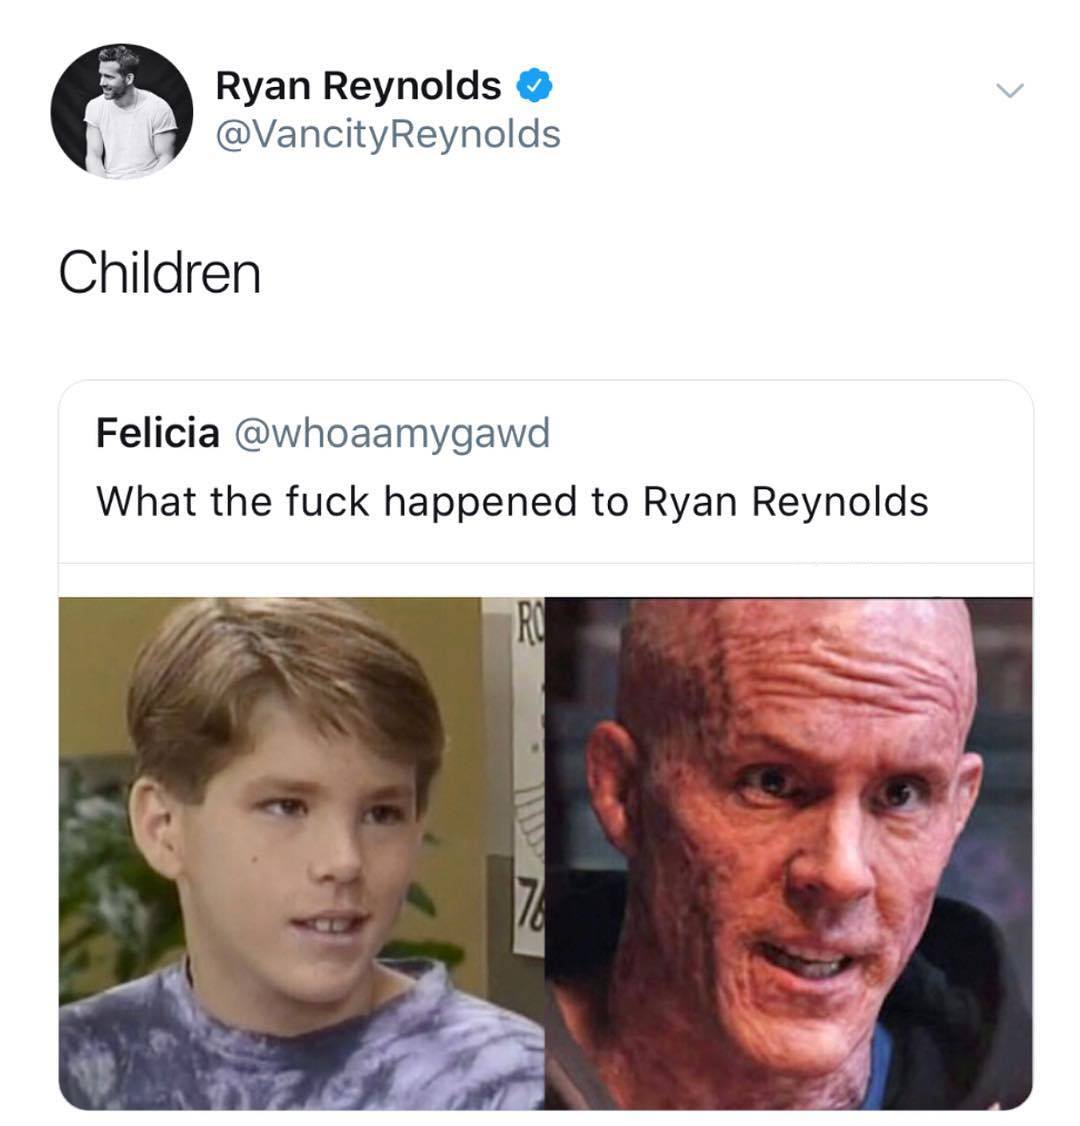 child vs adult - Ryan Reynolds Children Felicia What the fuck happened to Ryan Reynolds